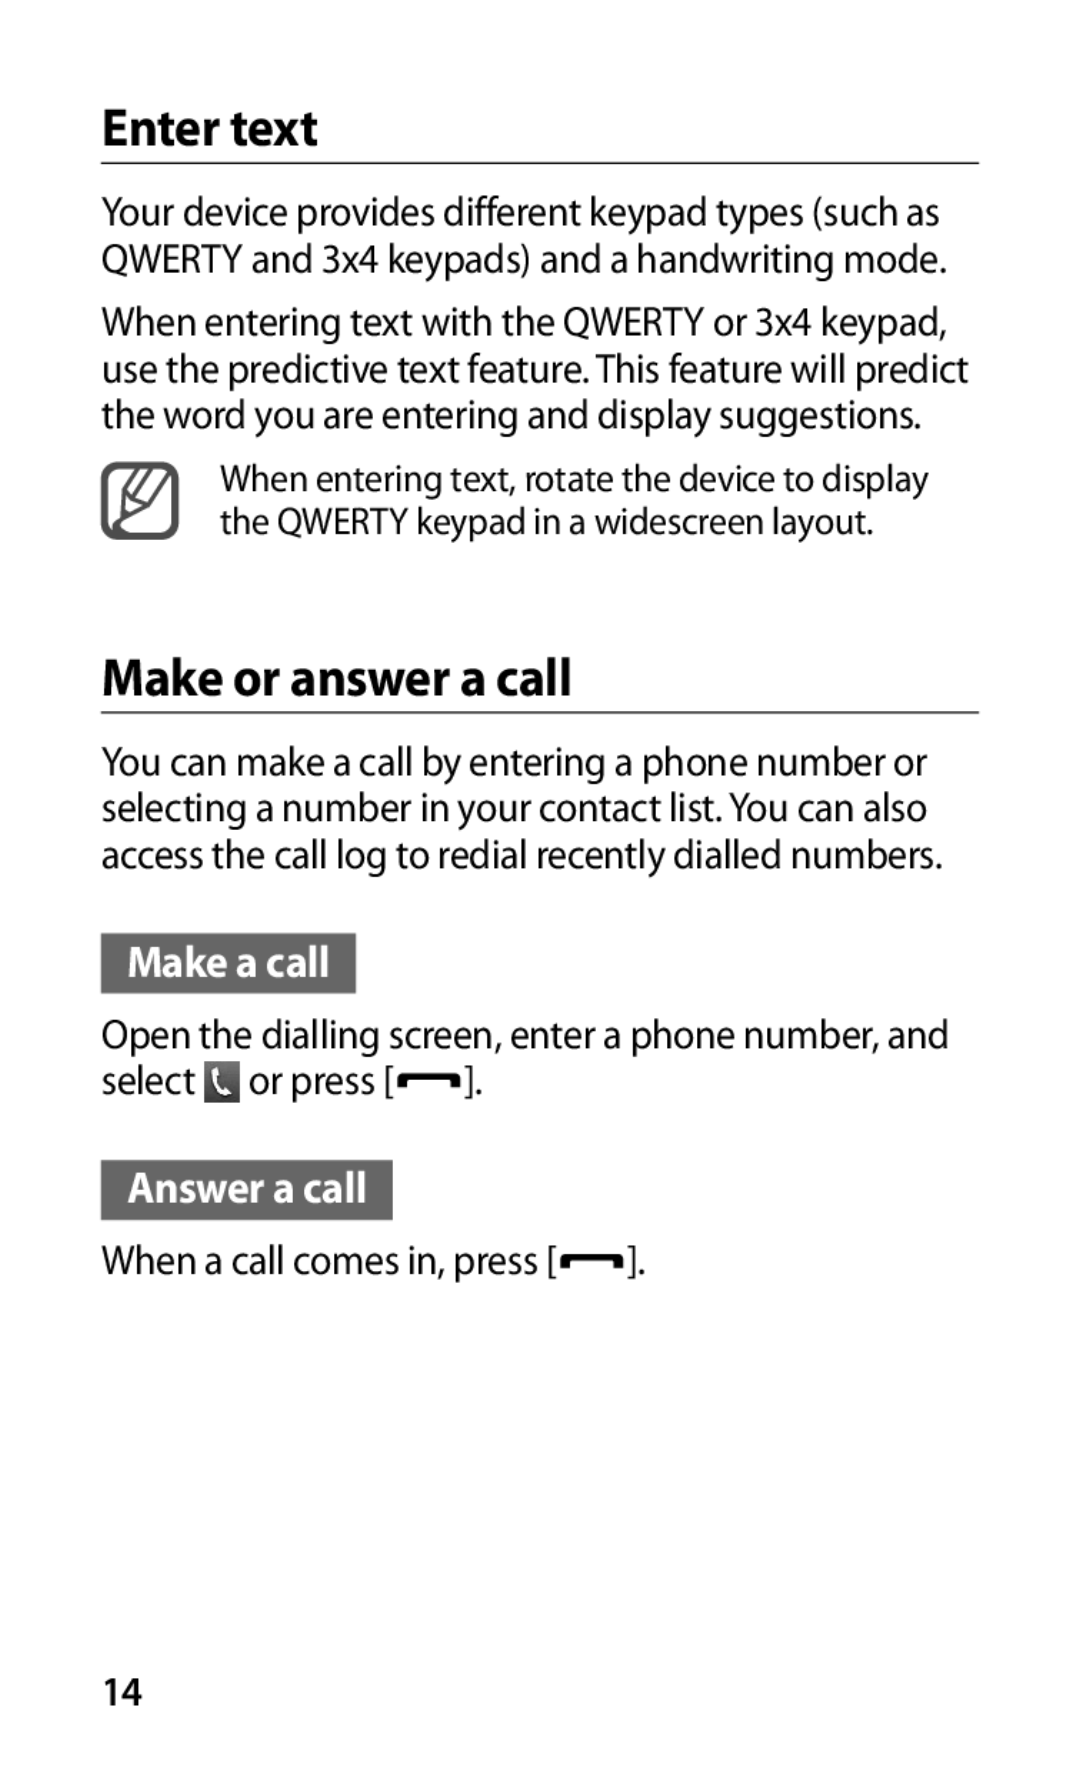 Samsung GT-C6712RWACYO, GT-C6712RWAXSK, GT-C6712LKAXEZ, GT-C6712RWAXEZ, GT-C6712LKAXSK manual Enter text, Make or answer a call 